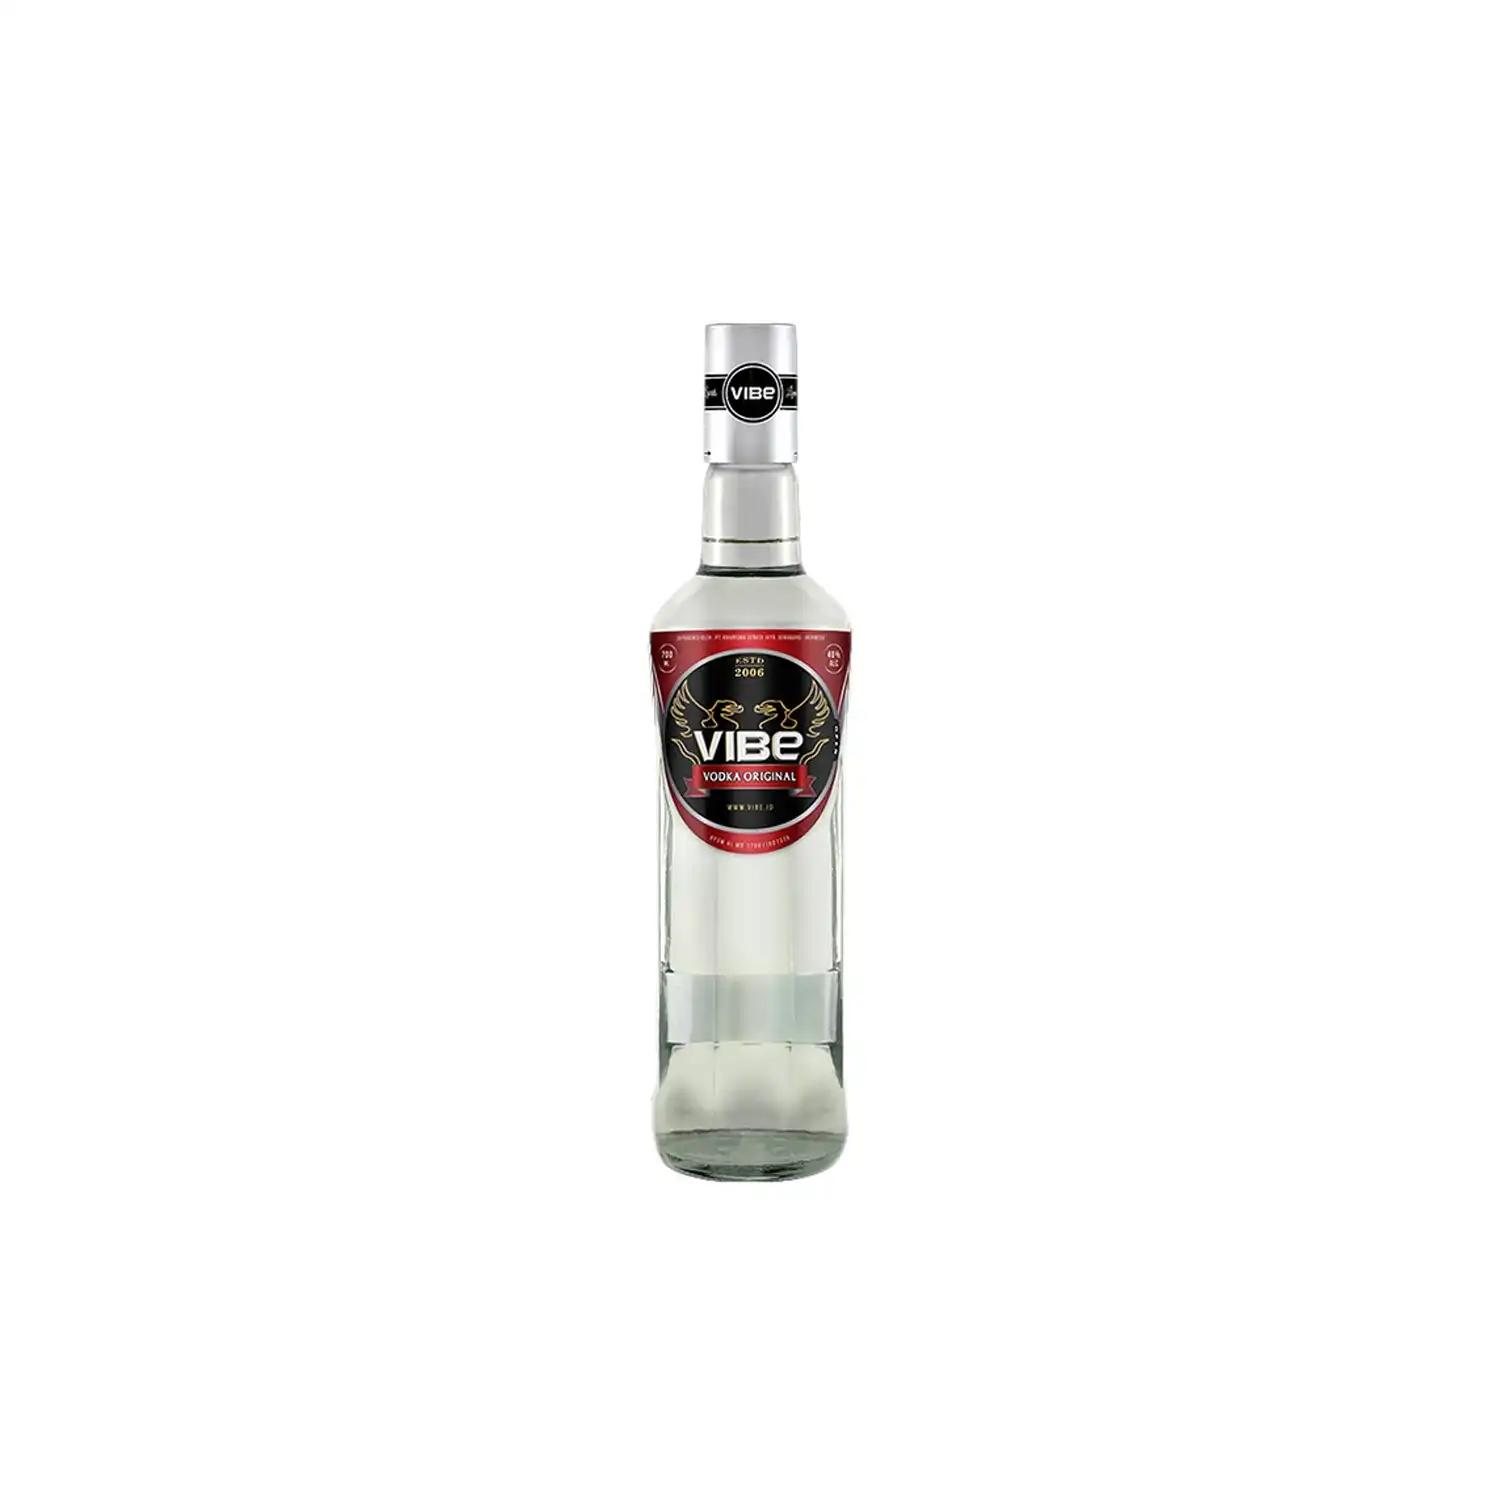 Harga Vibe Vodka Original 700ml - Original- Sulanginaja